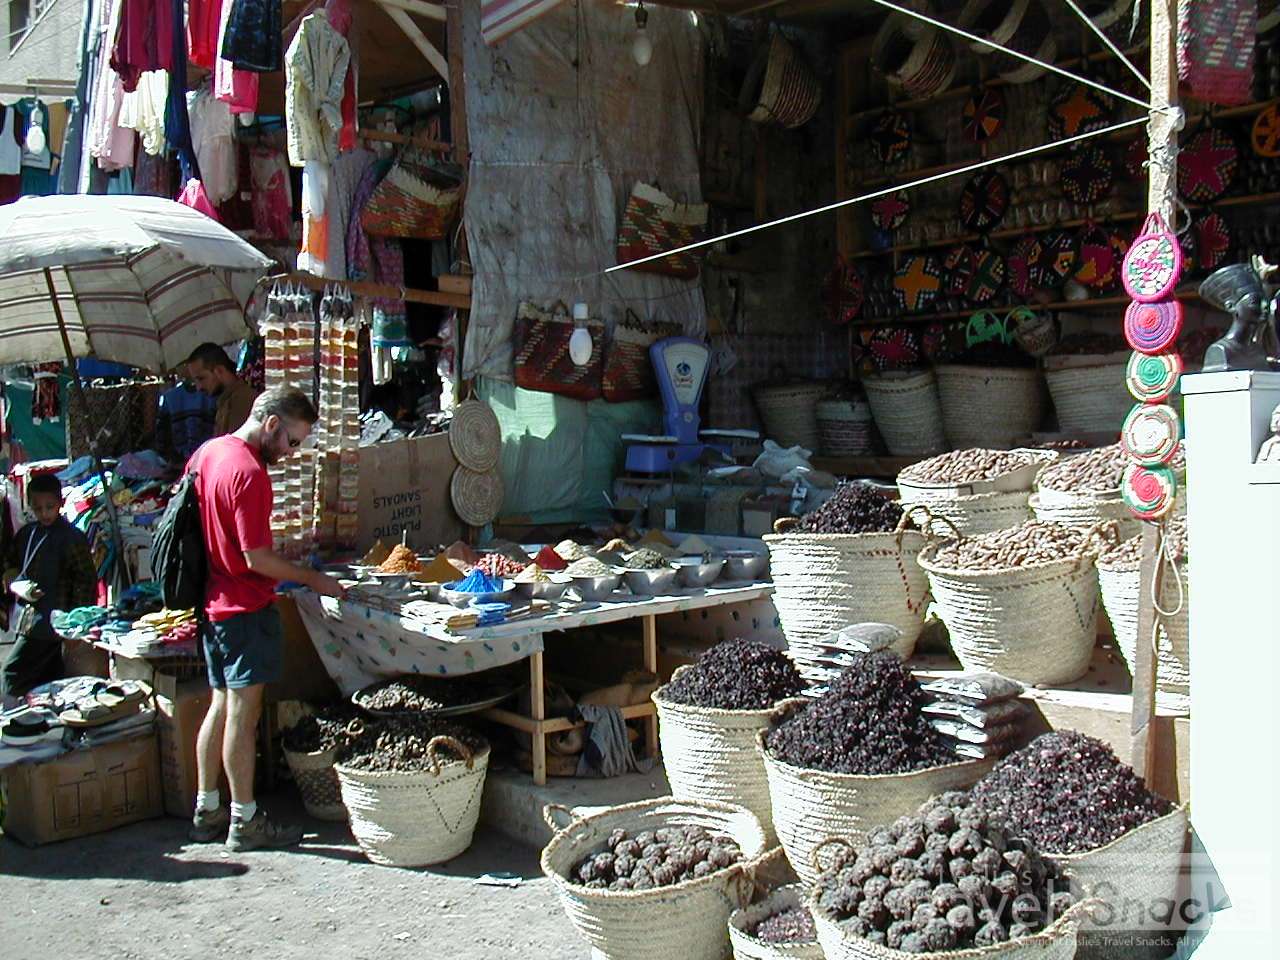 Market streets of Egypt